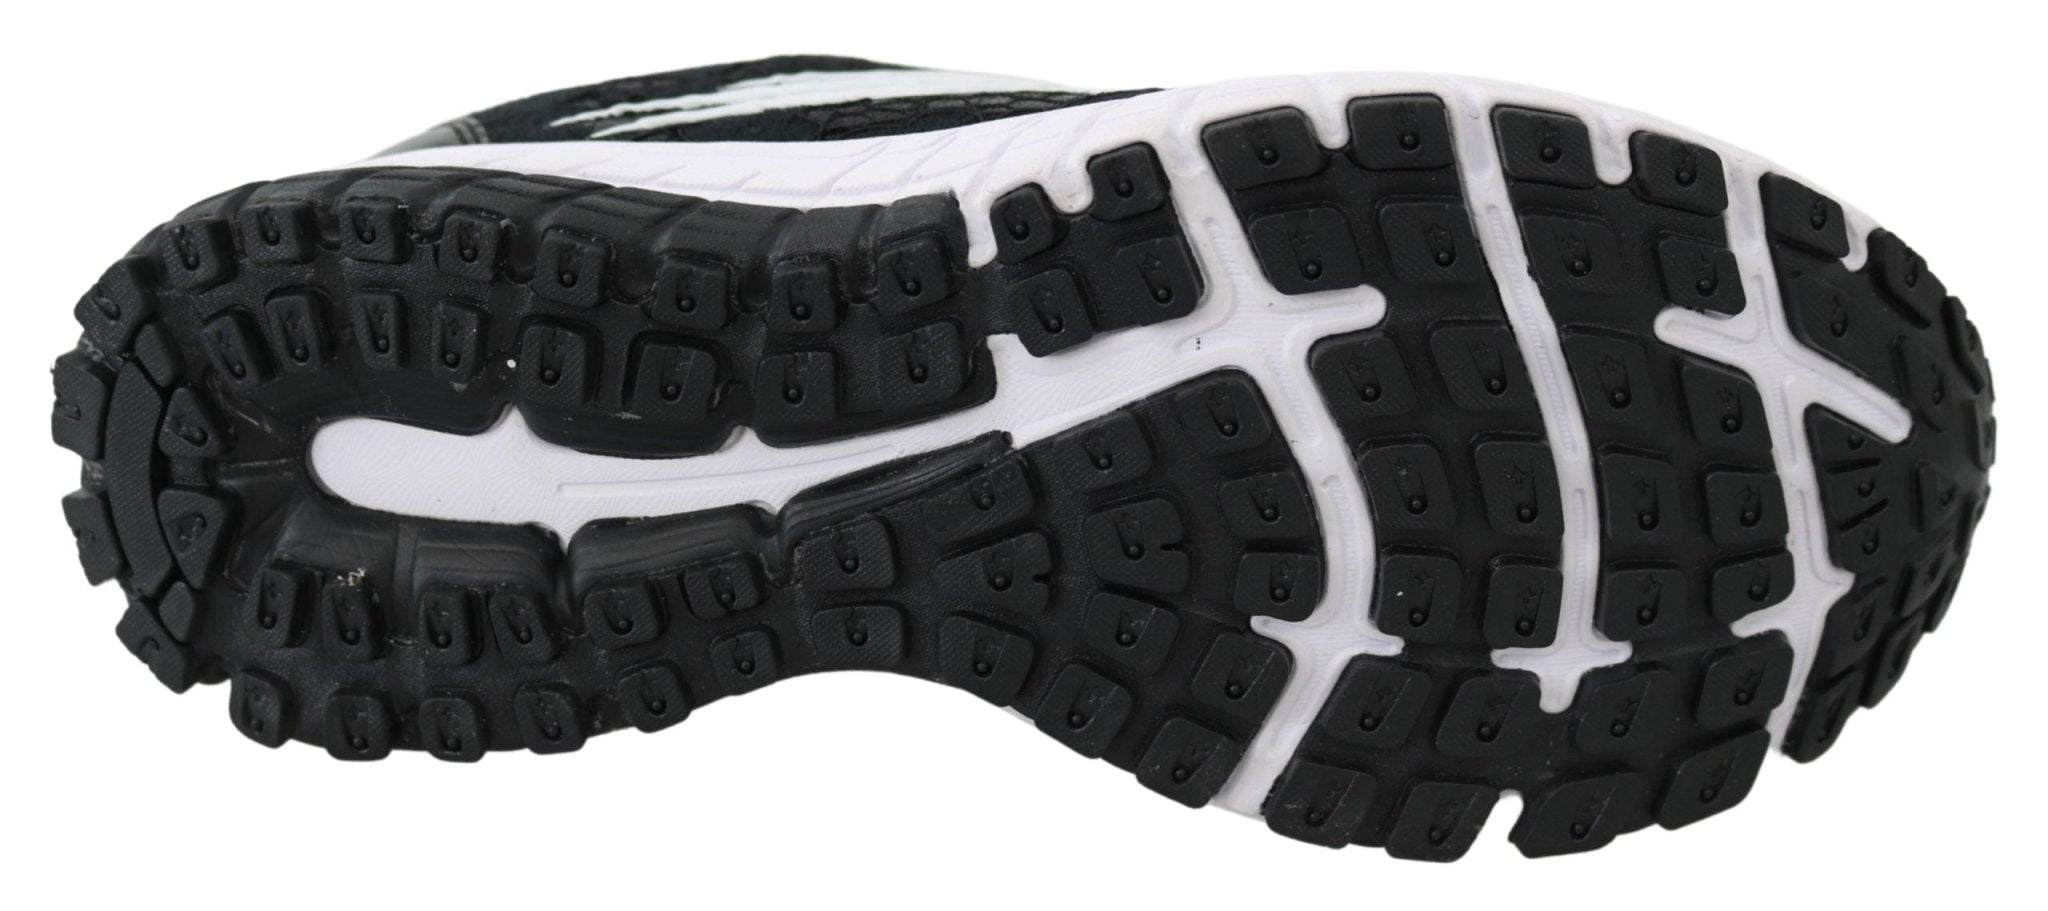 Plein Sport Black Polyester Runner Umi Sneakers Shoes - Fizigo